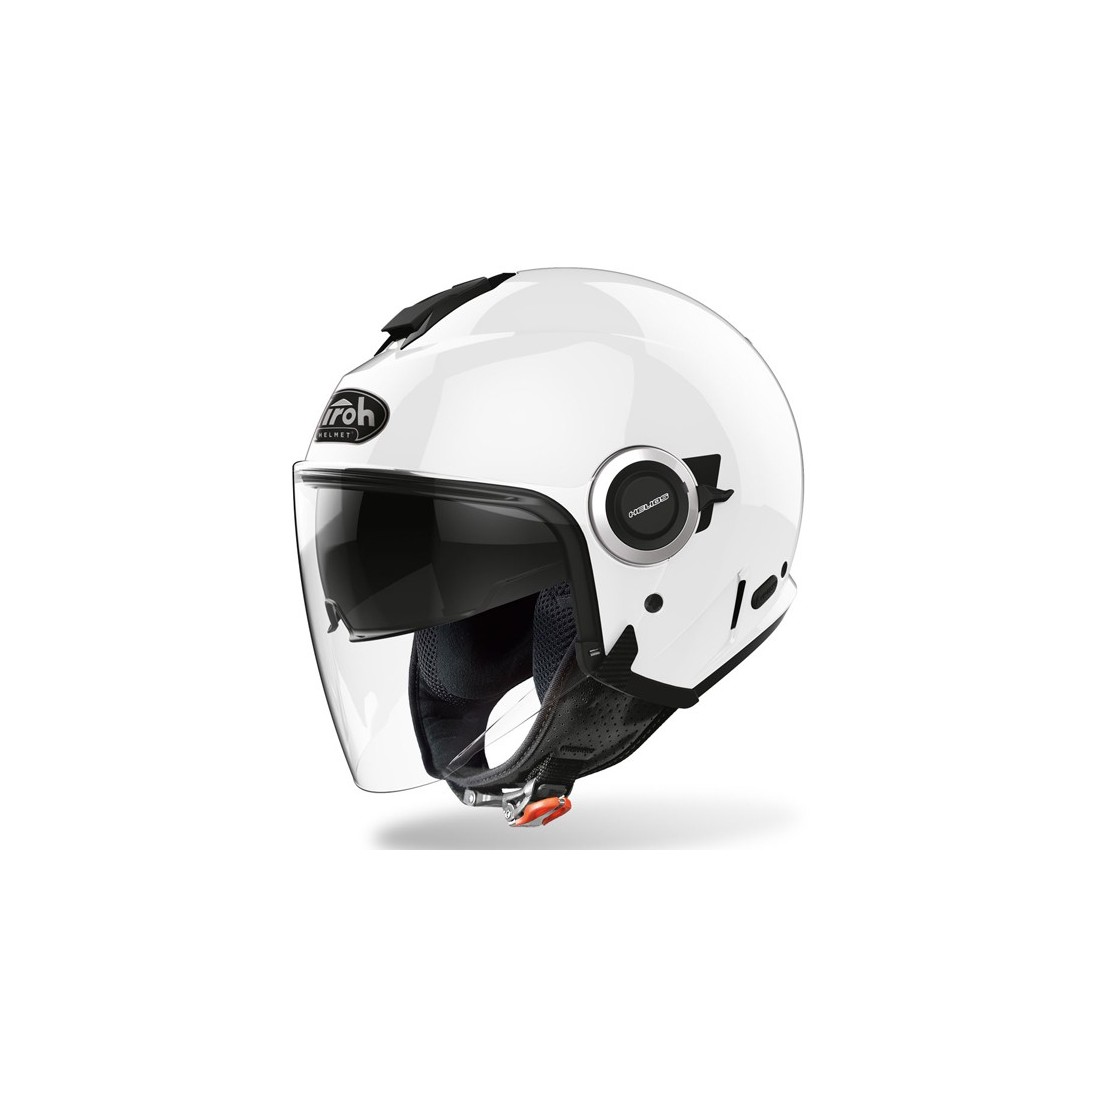 Casco jet moto scooter Airoh Helios Map black mat white helmet casque 